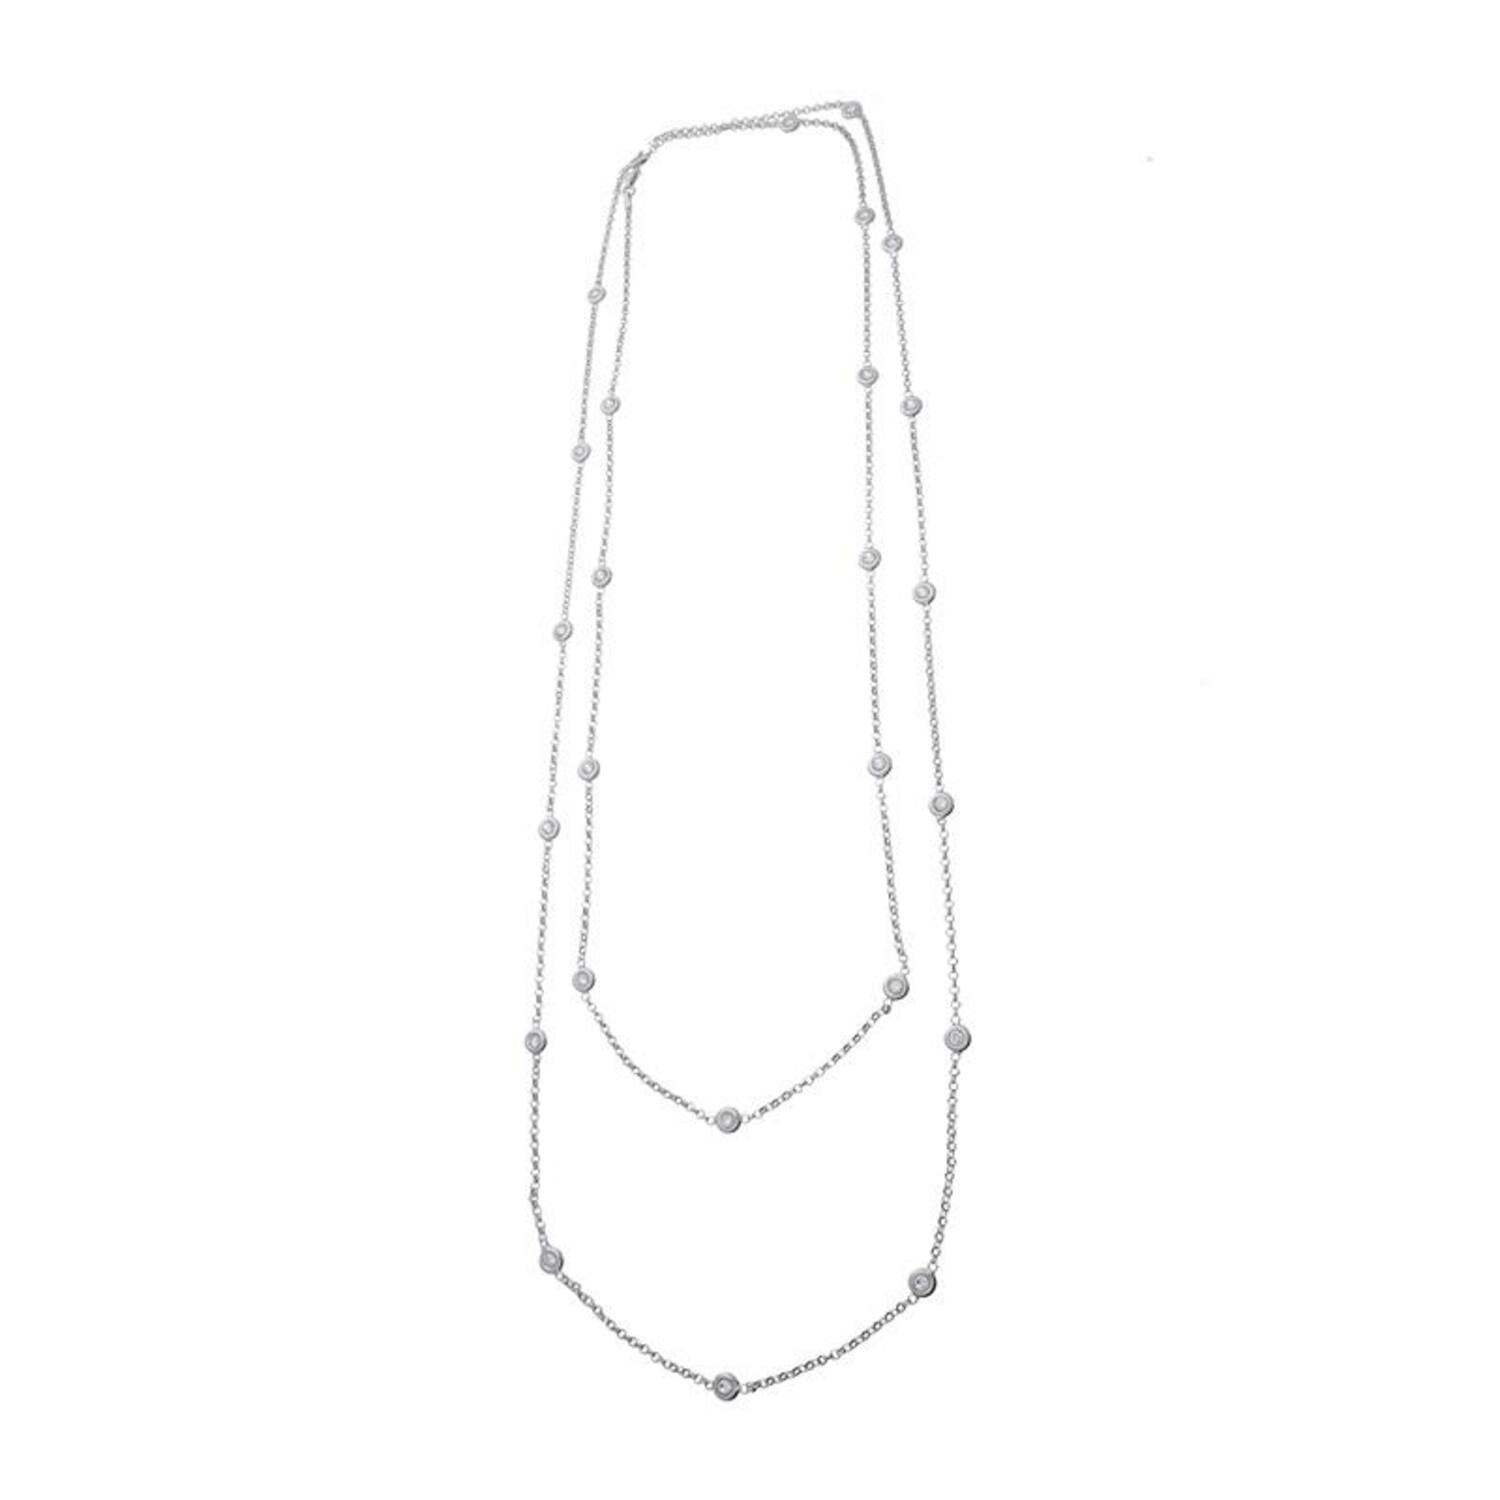  Chanel collier - Jasseron - Zirkonia - Zilver - 71-100 cm